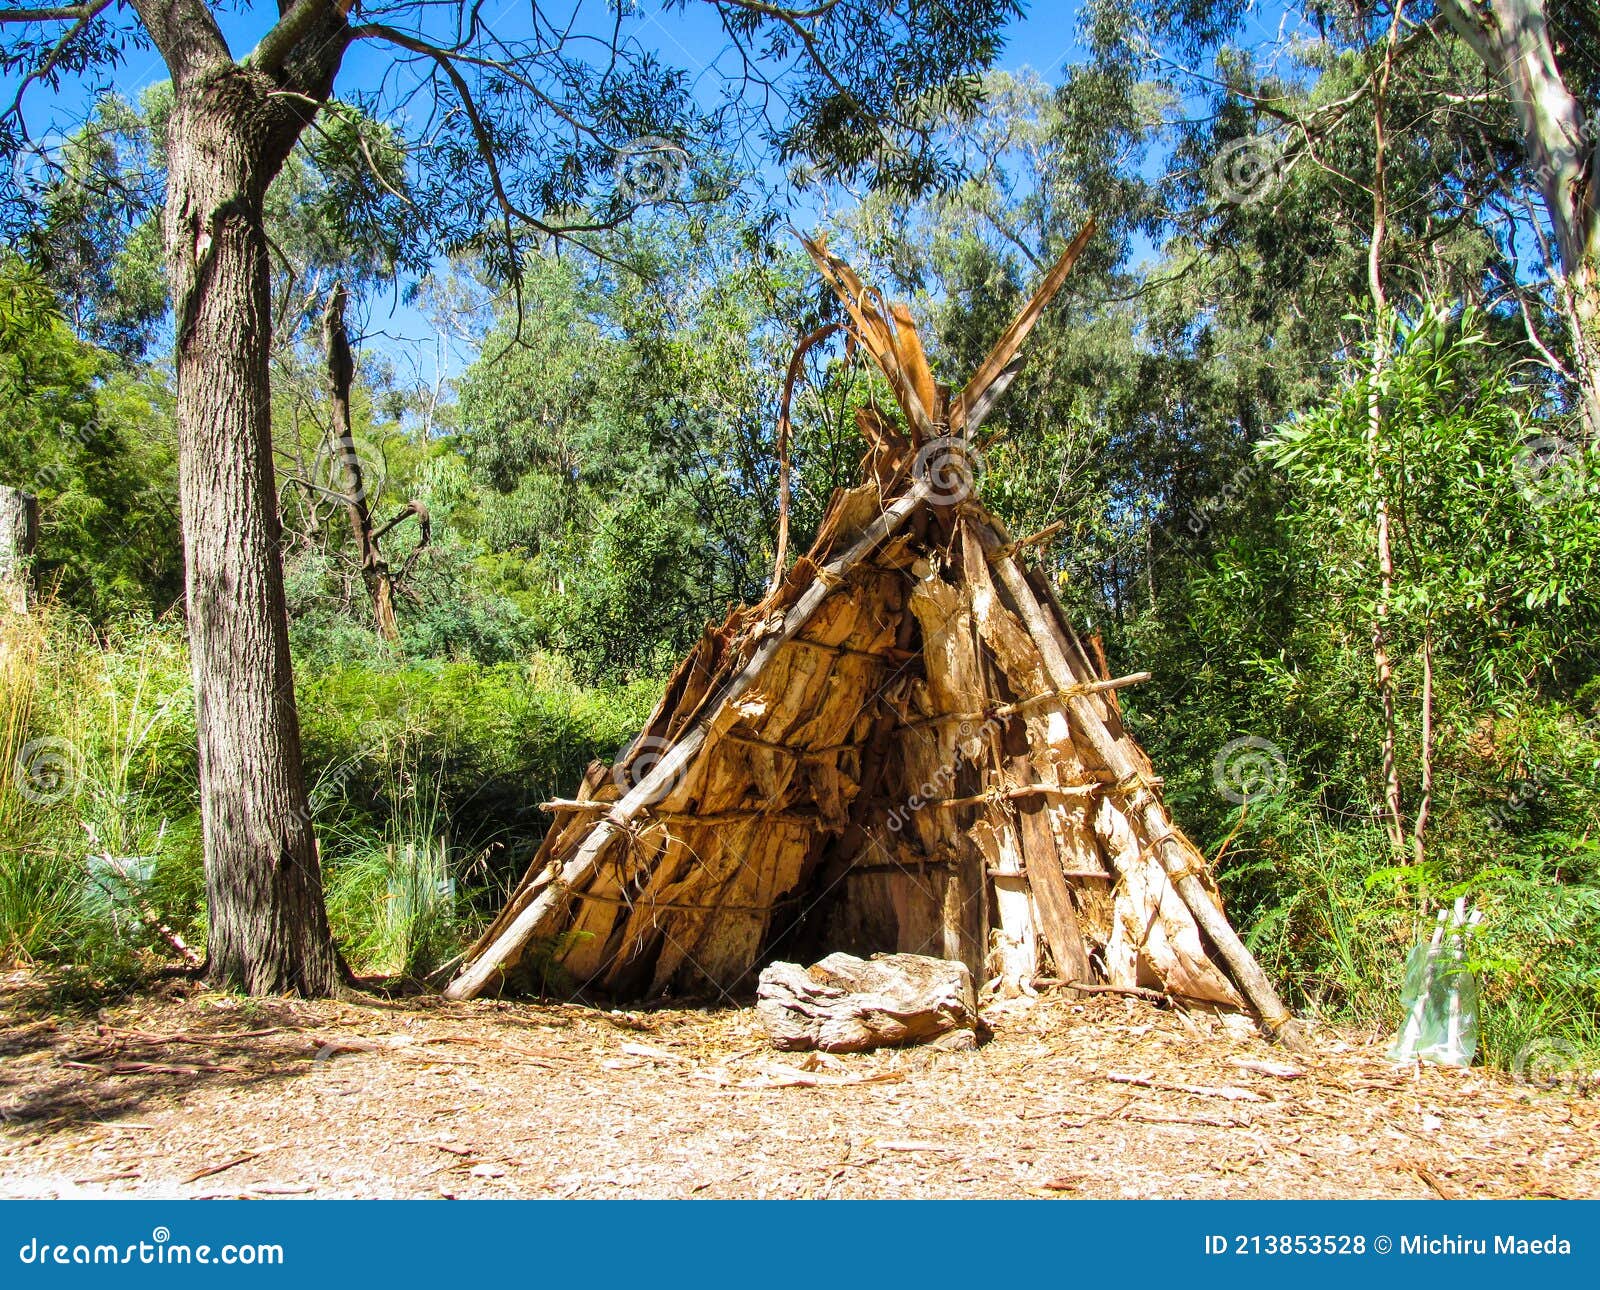 Aboriginal Australia Shelter Photos & Royalty-Free Photos from Dreamstime